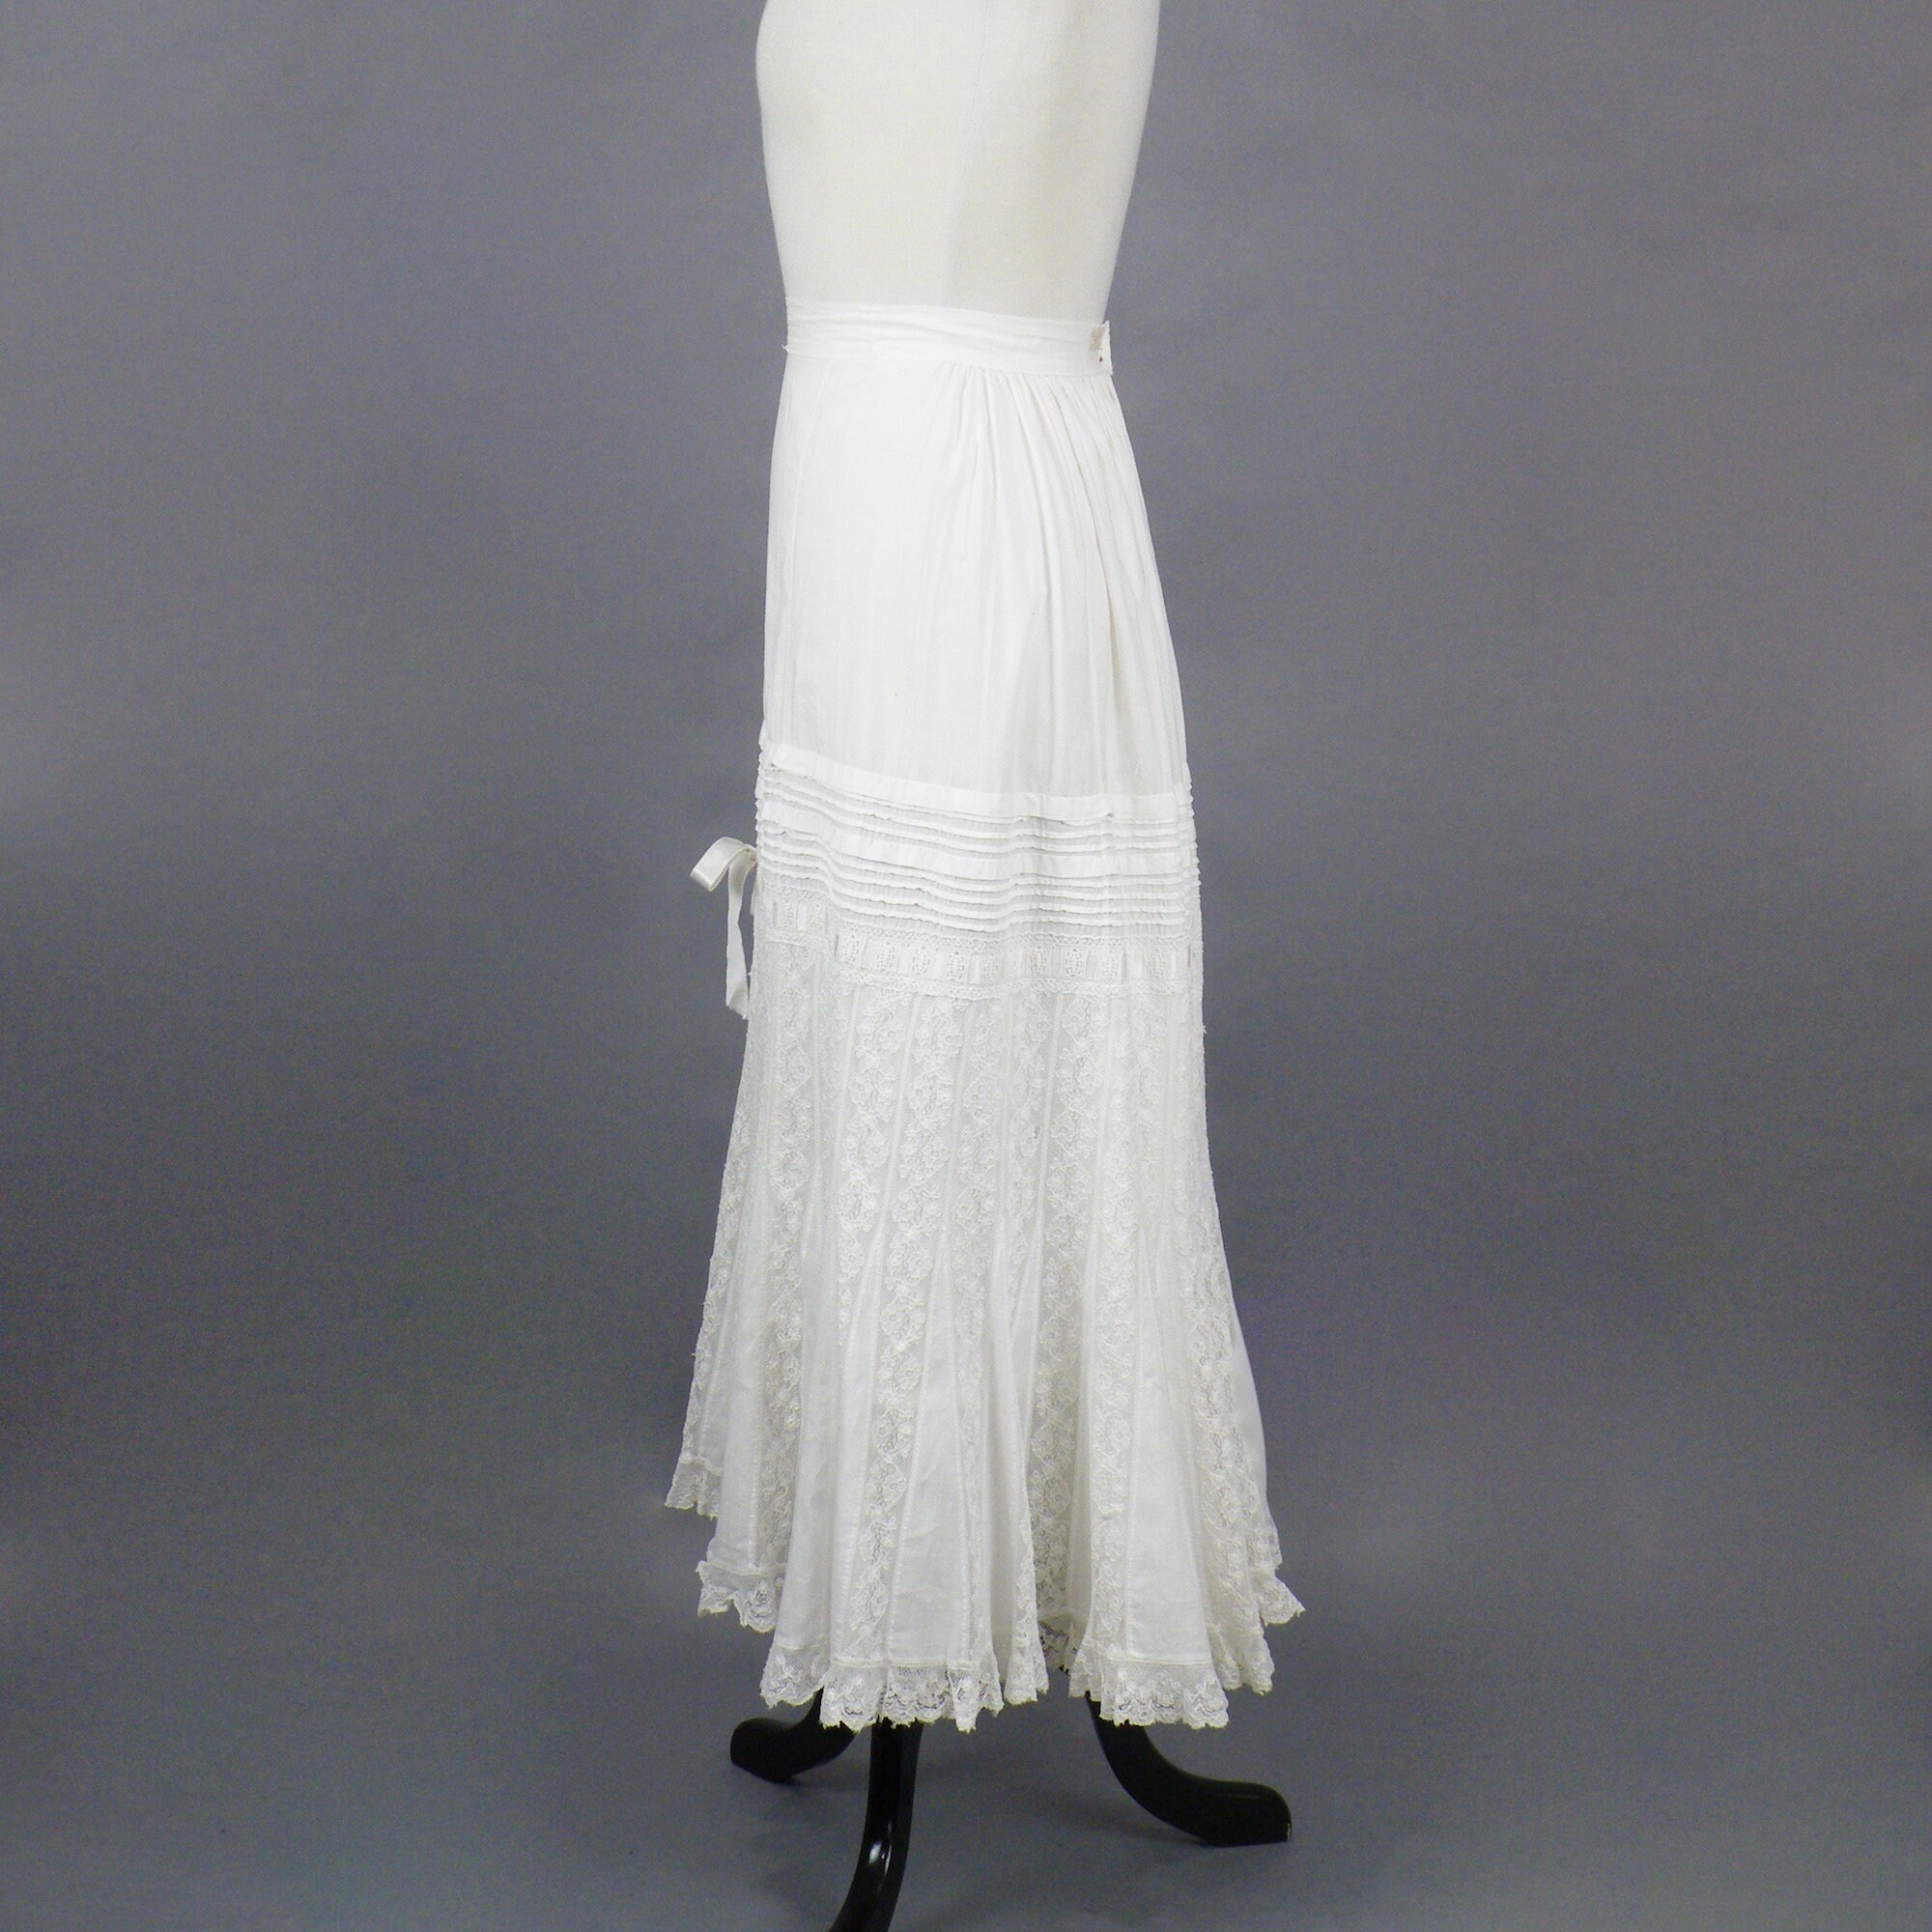 HOLD Antique Lace Petticoat, 1900s 1910s White Cotton Lace Edwardian ...